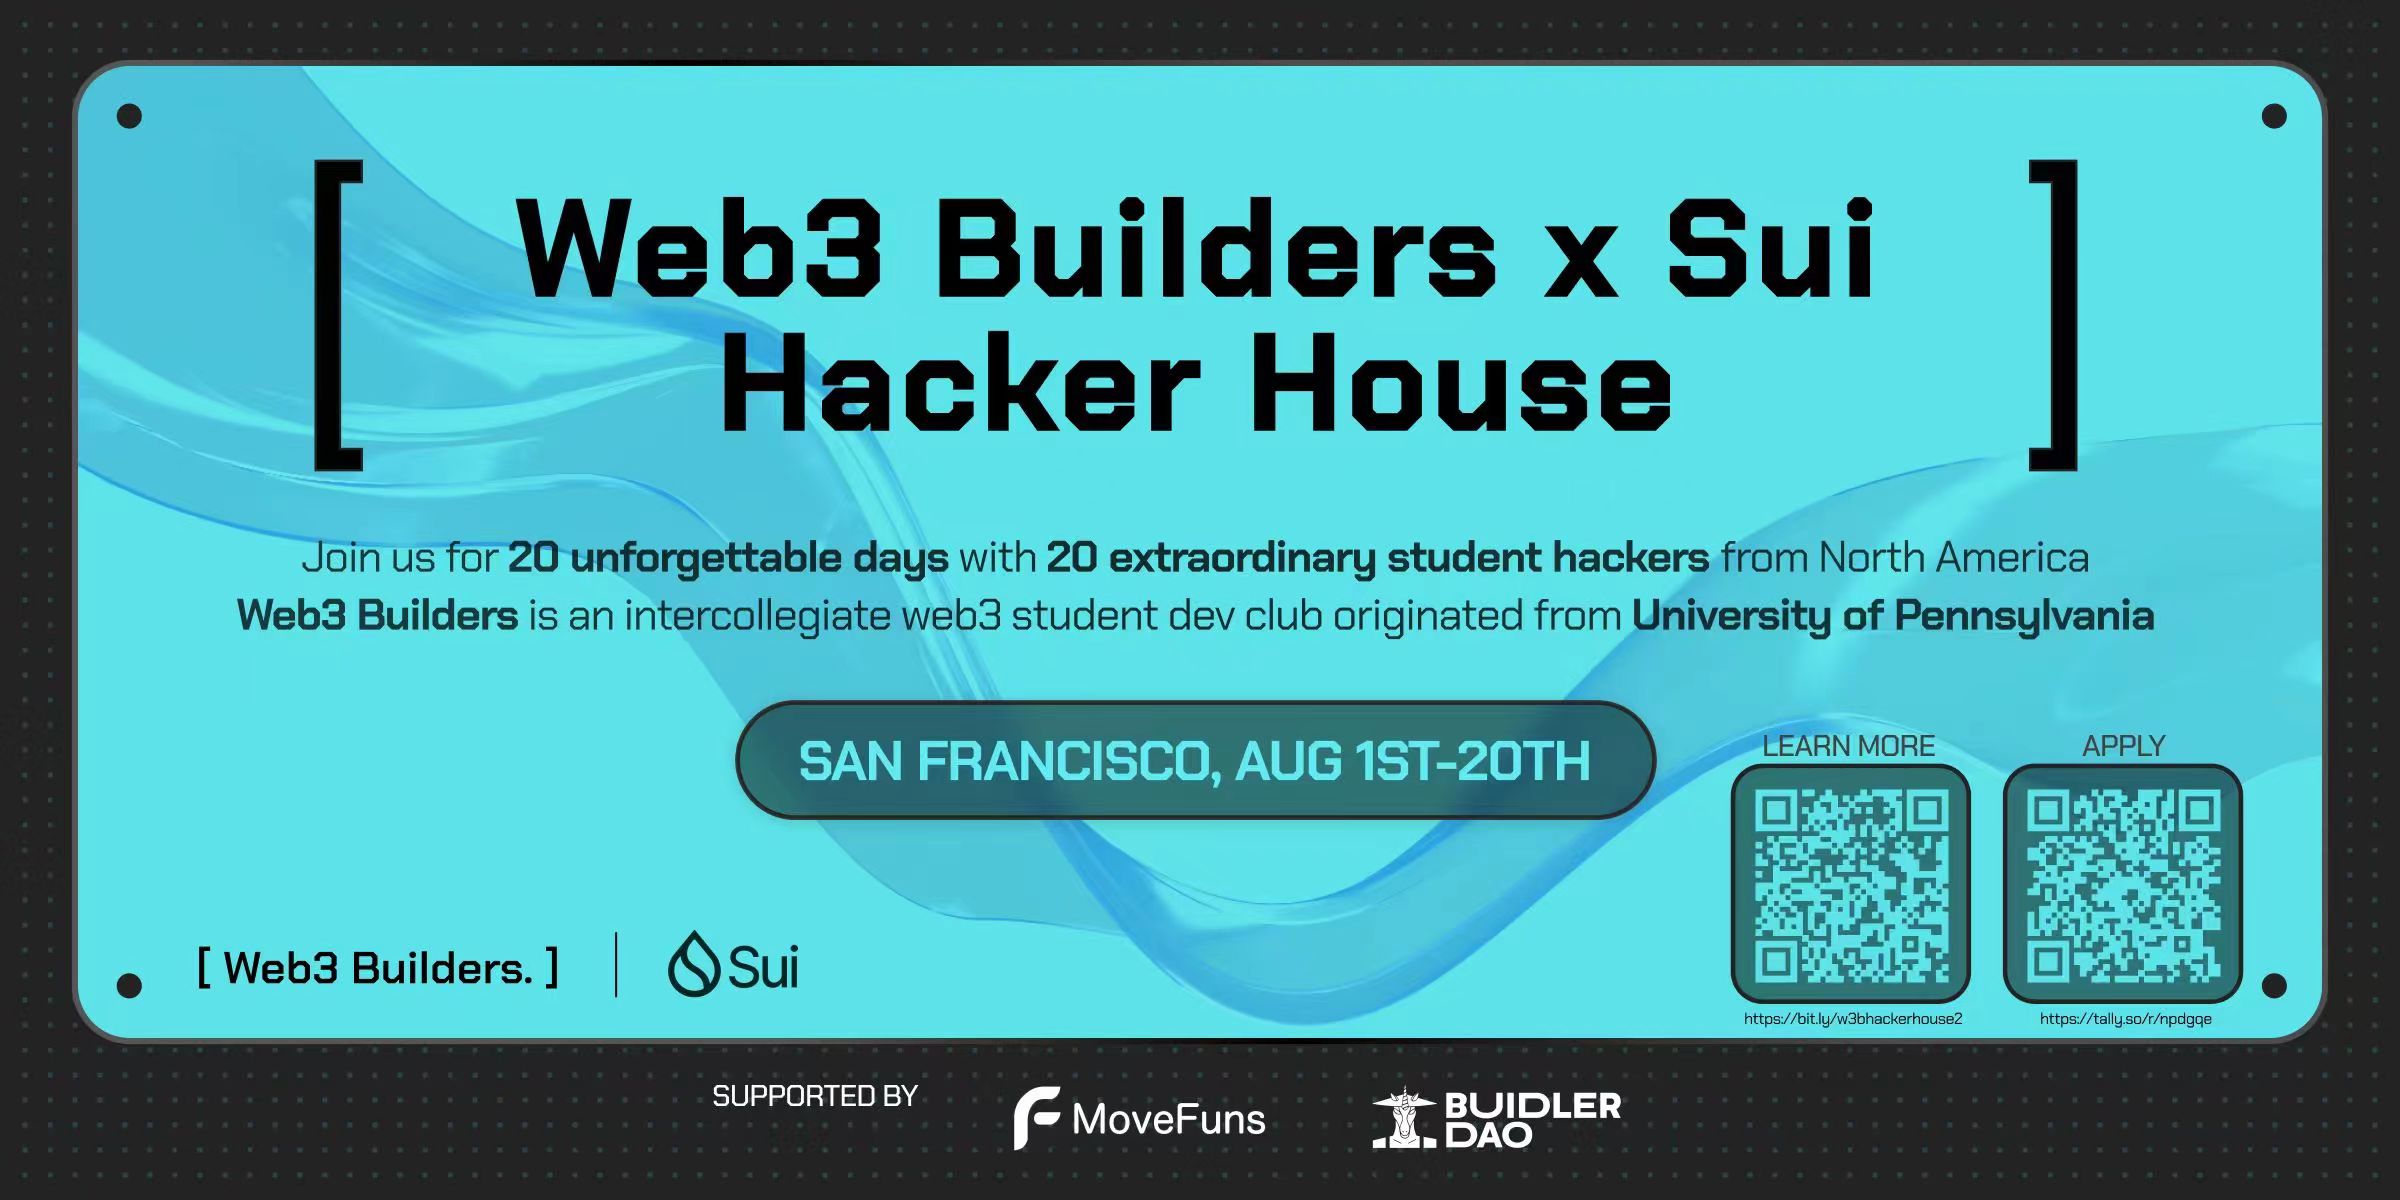 Web3 Buidlers x Sui Hacker House